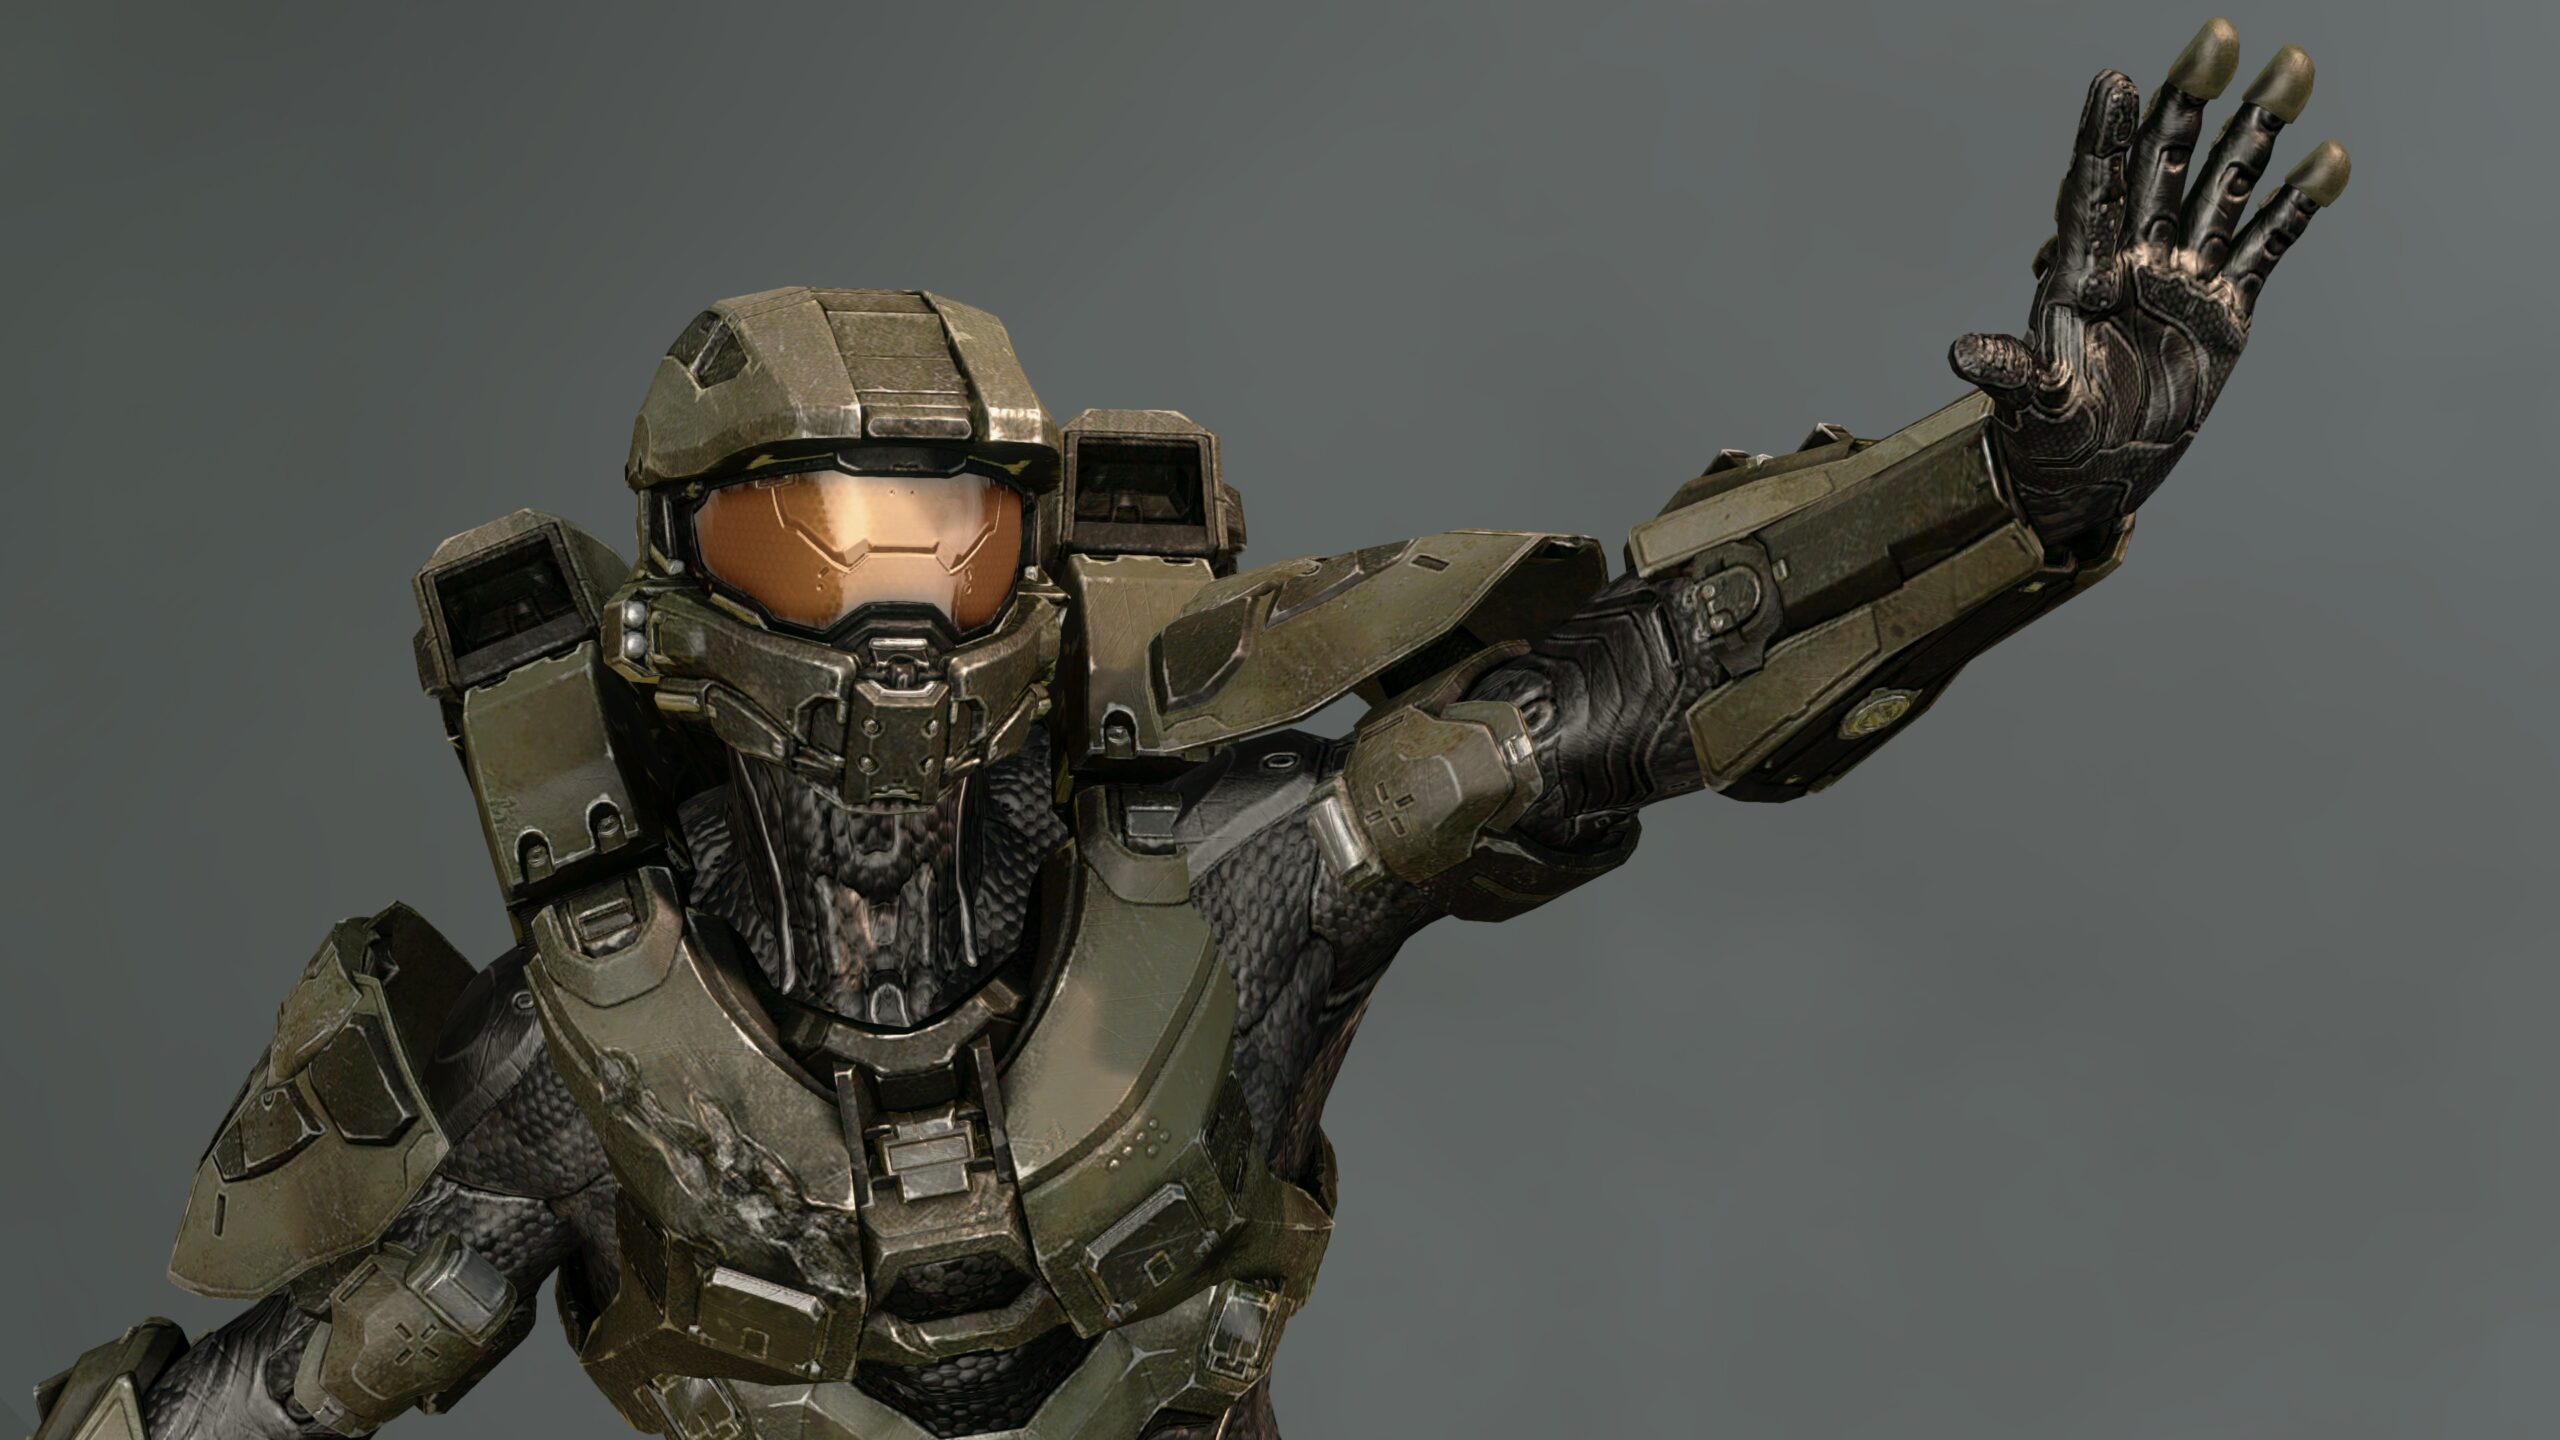 Halo 4 in-game screenshot of Master Chief waving